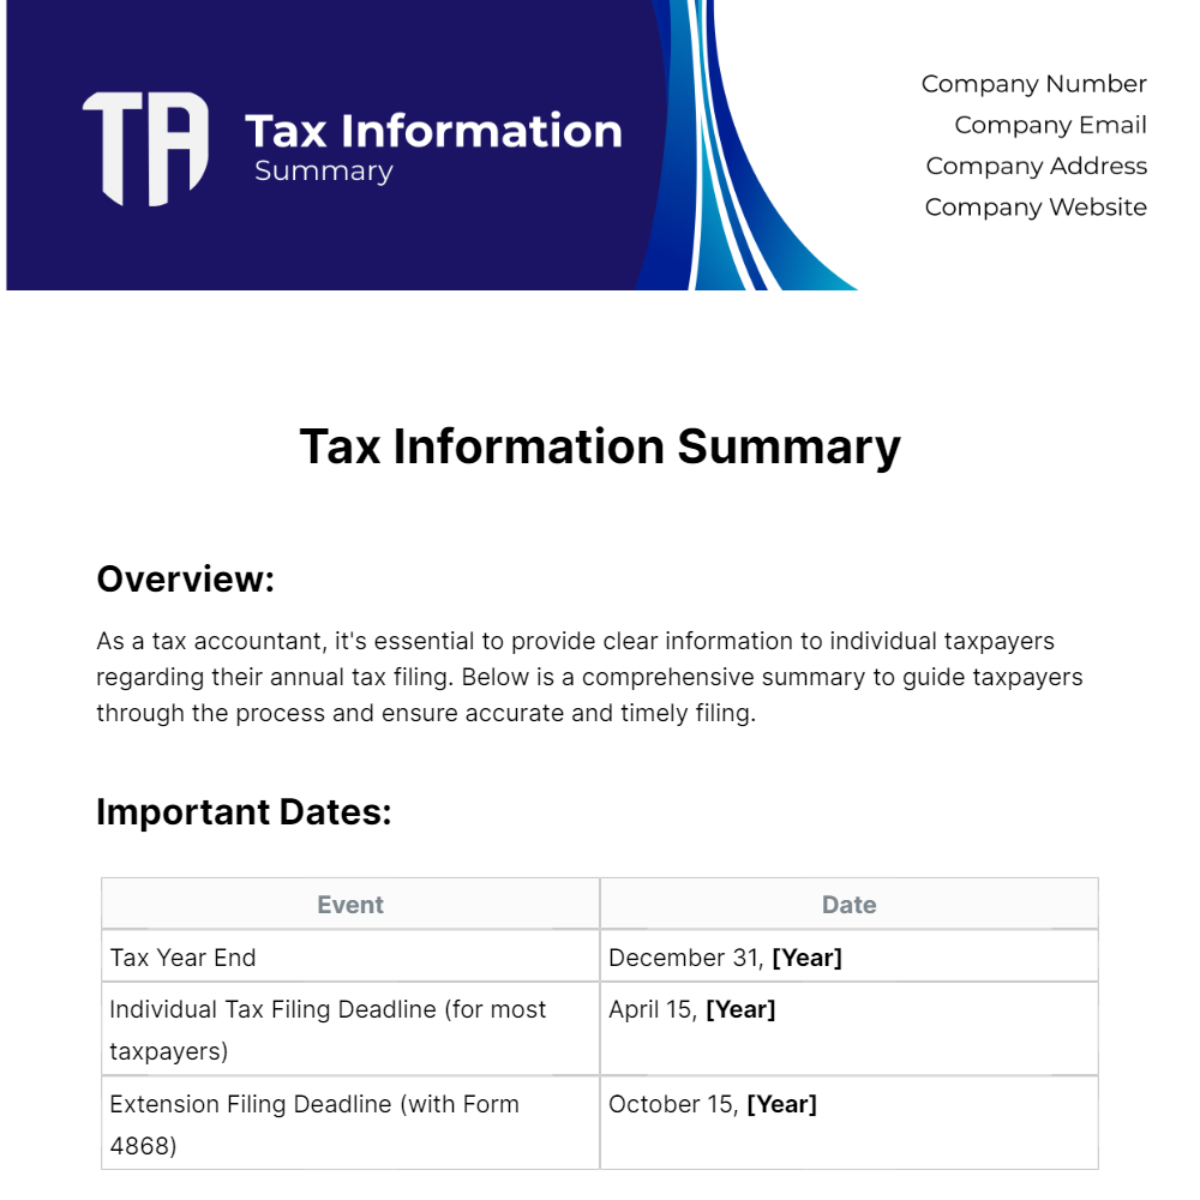 Tax Information Summary Template